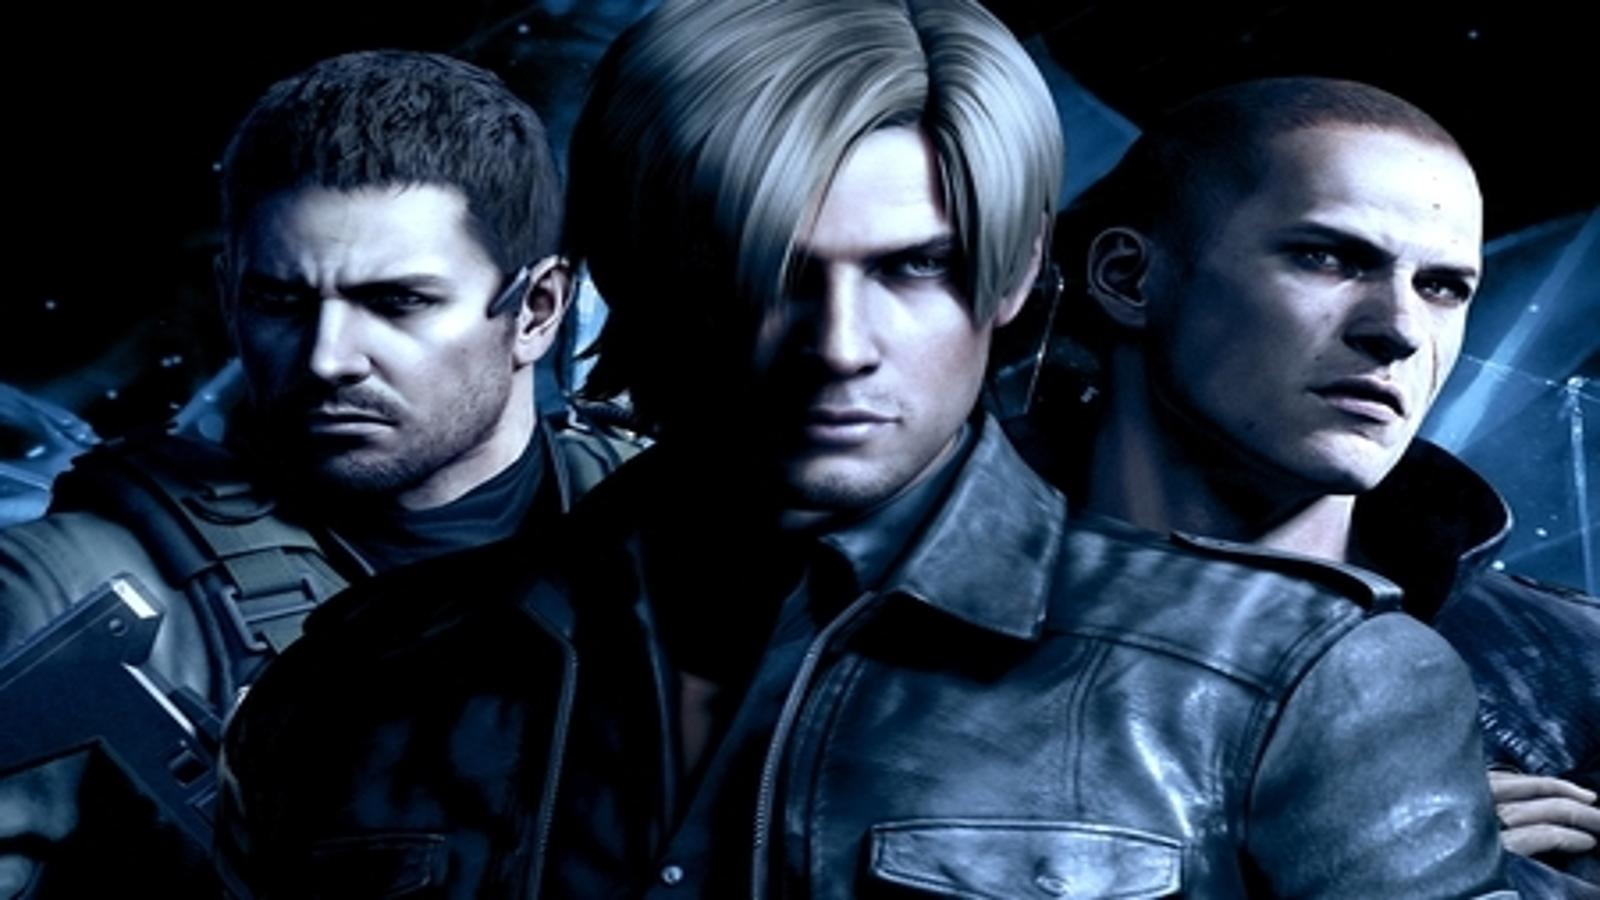 Resident Evil 6 Trailer Reveals the Last Chapter